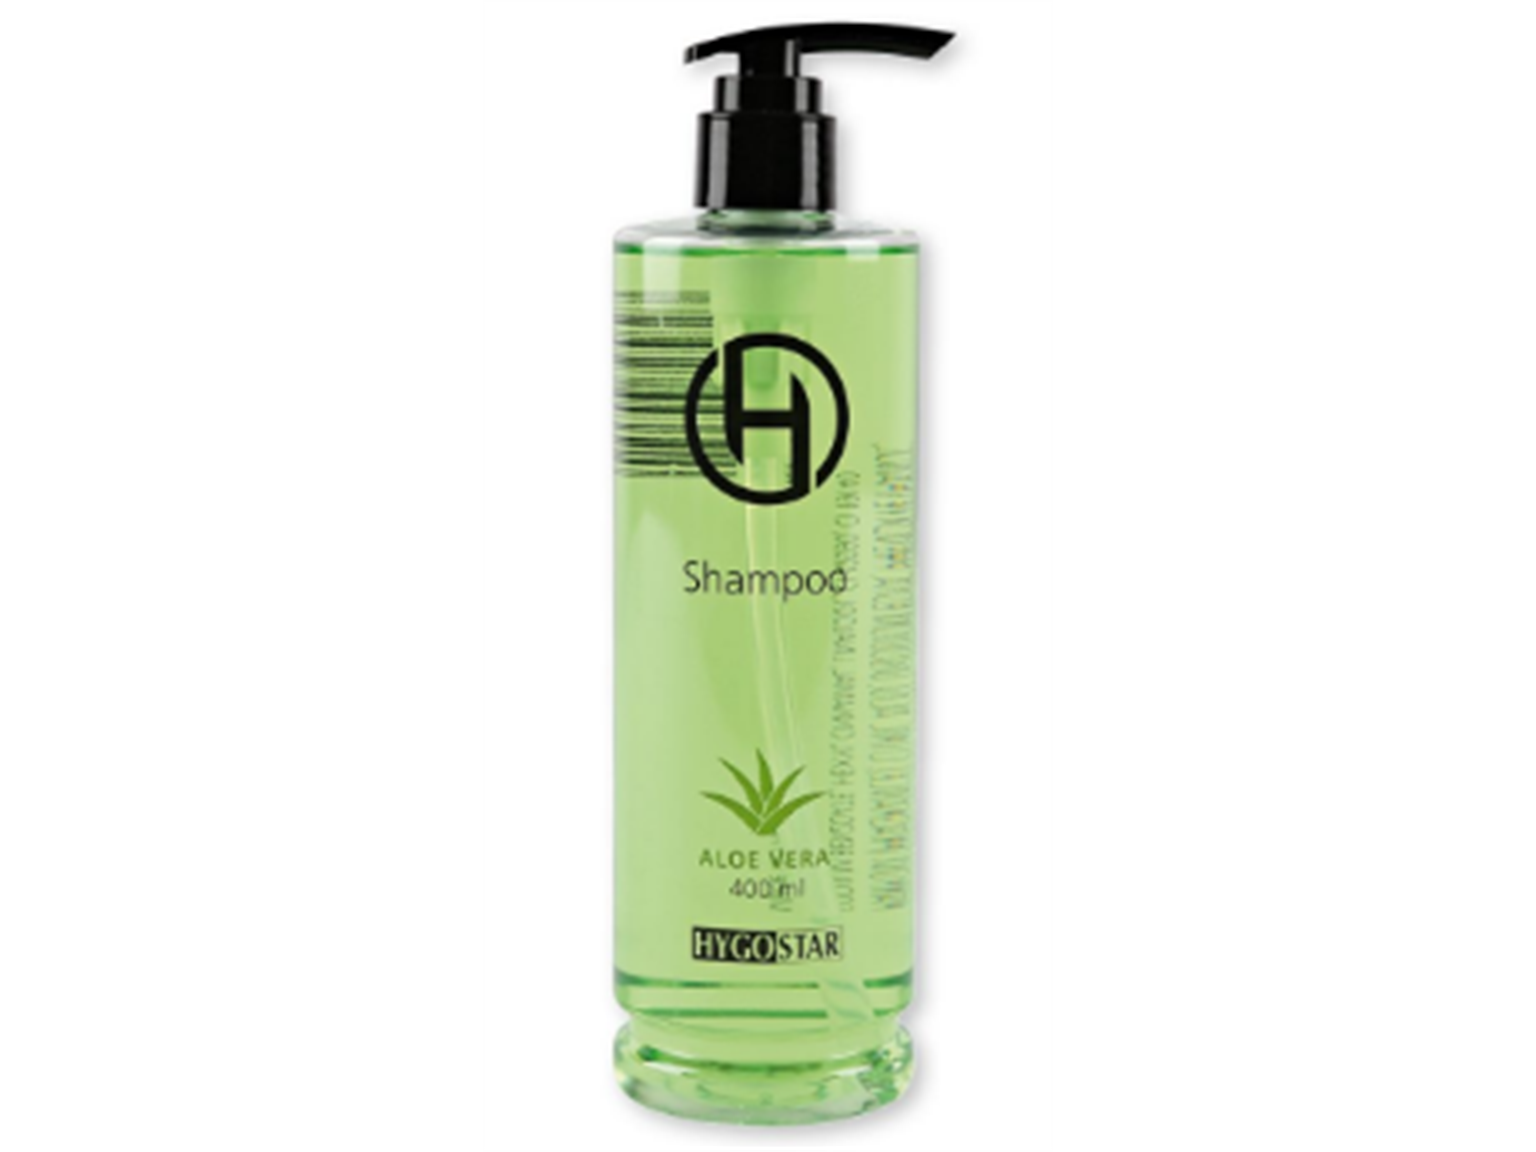 Pumpspender Shampoo, transparent 400 ml, transparent, Duft: Aloe Vera